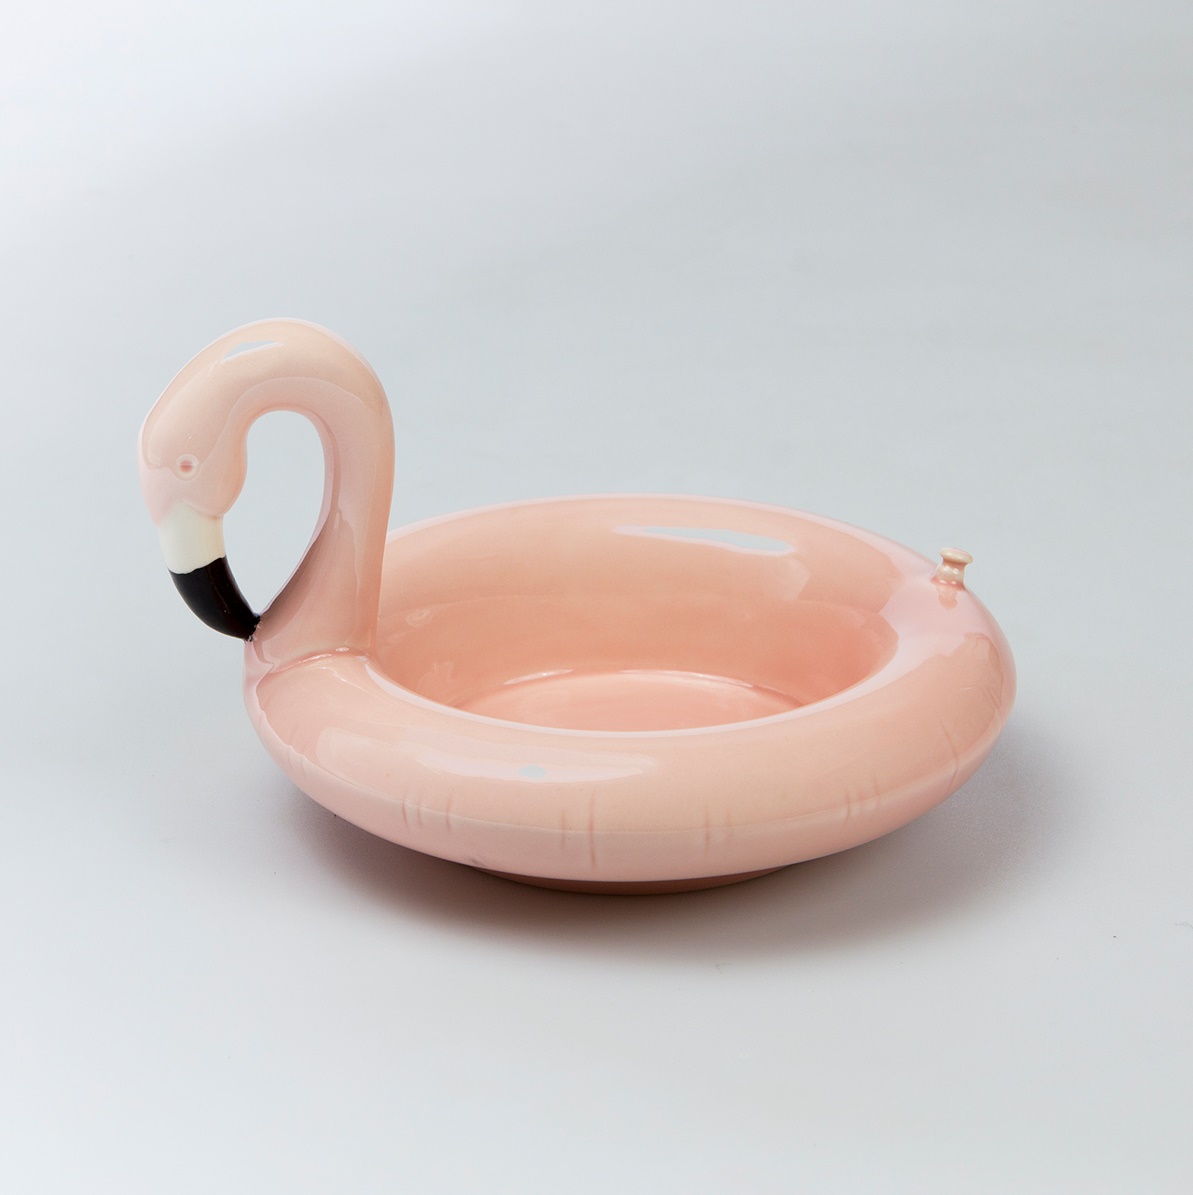 Flamingo pool float